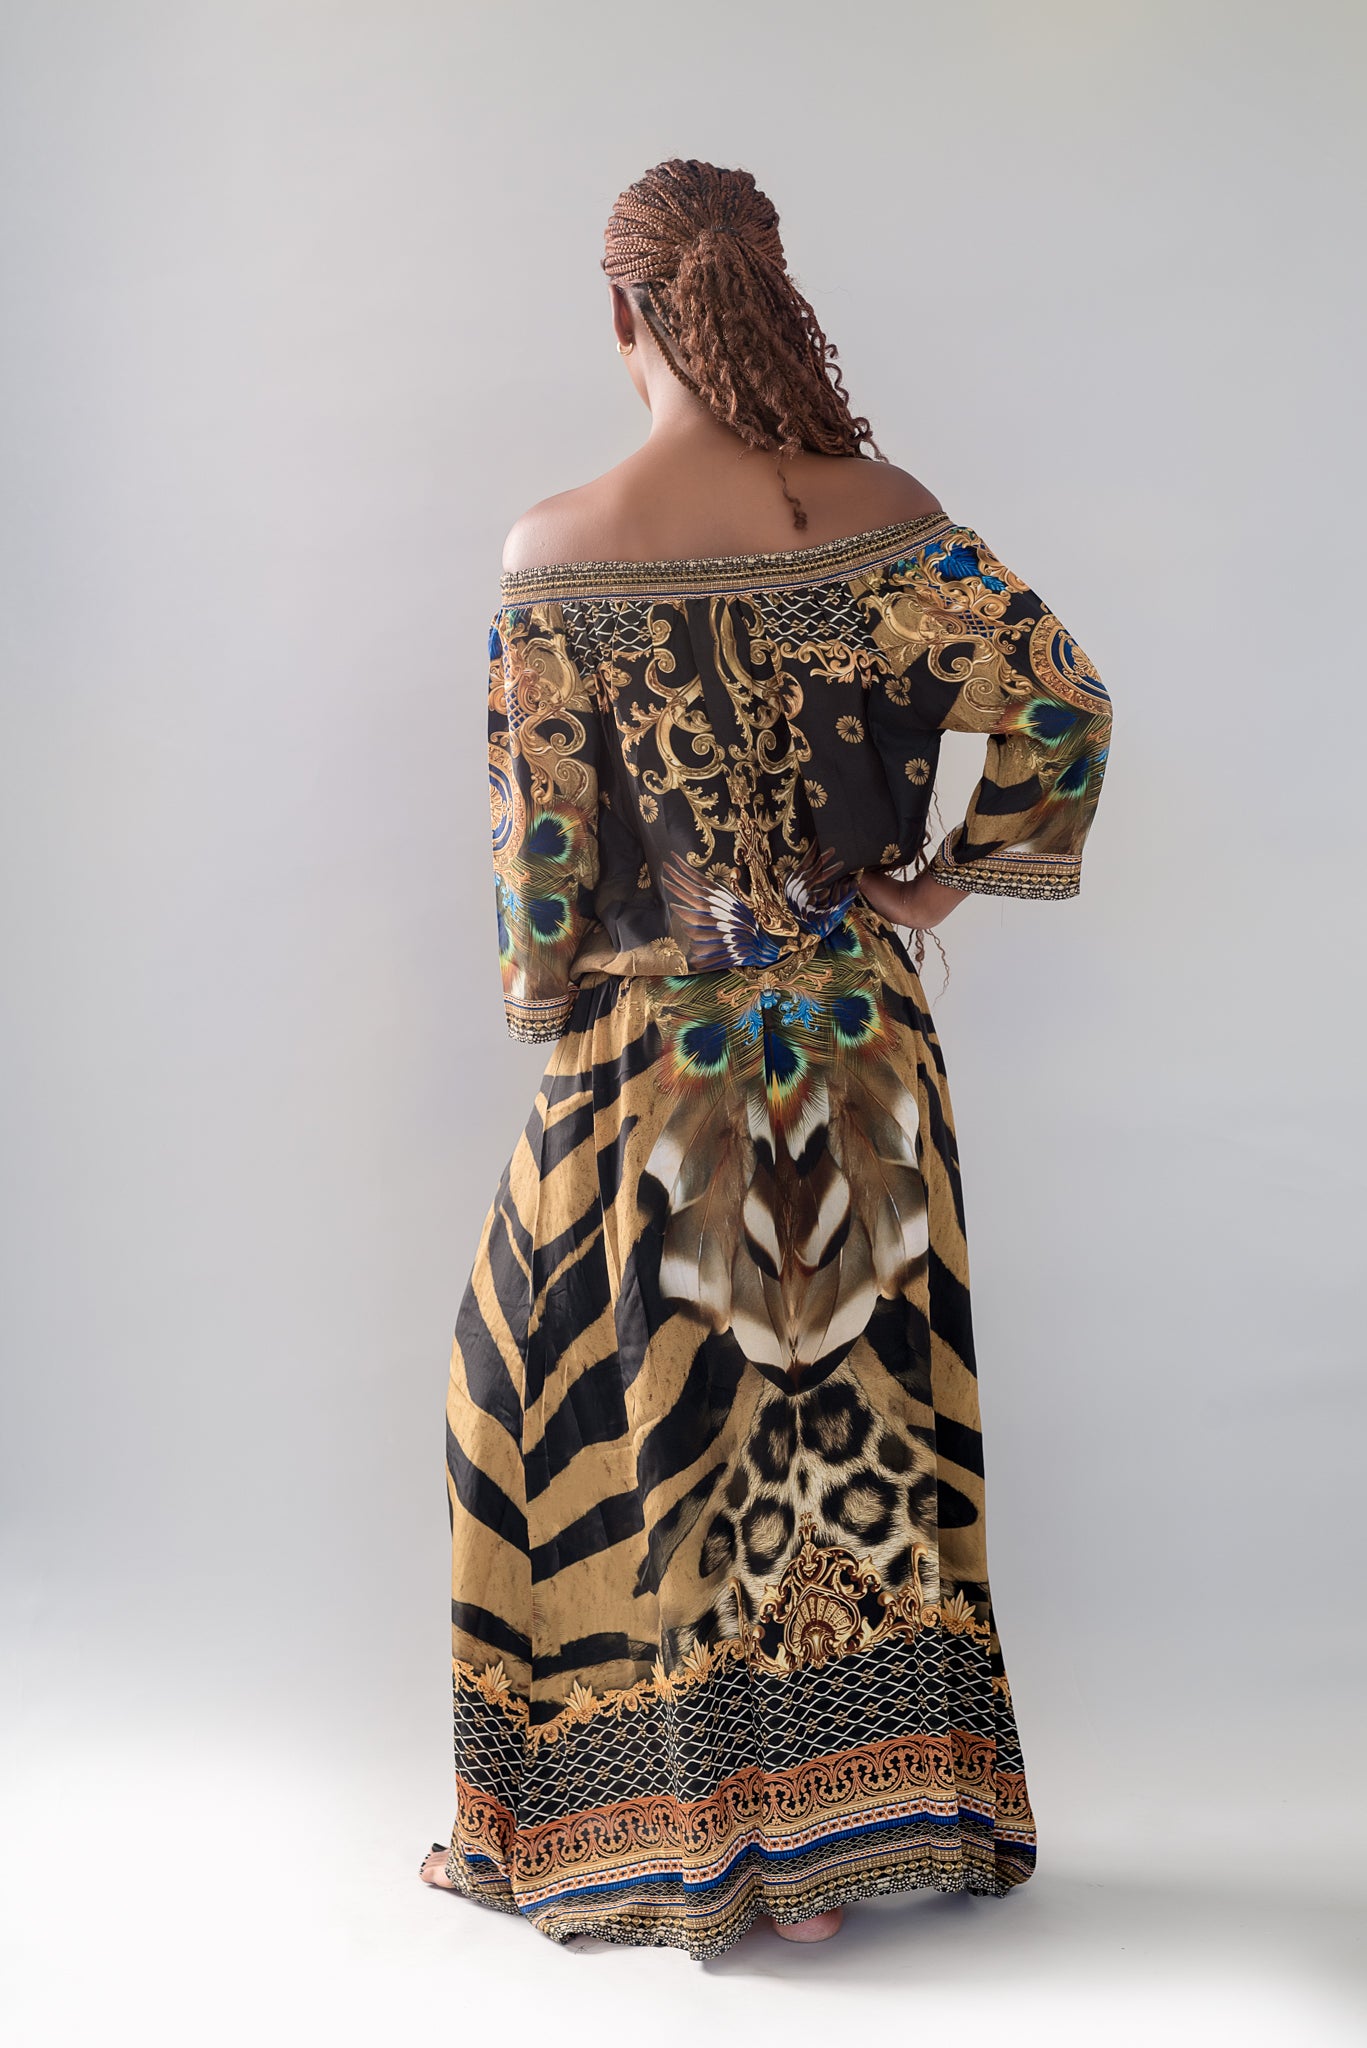 EXOTIC ZEBRA FEMININE OFF THE SHOULDER DRESS